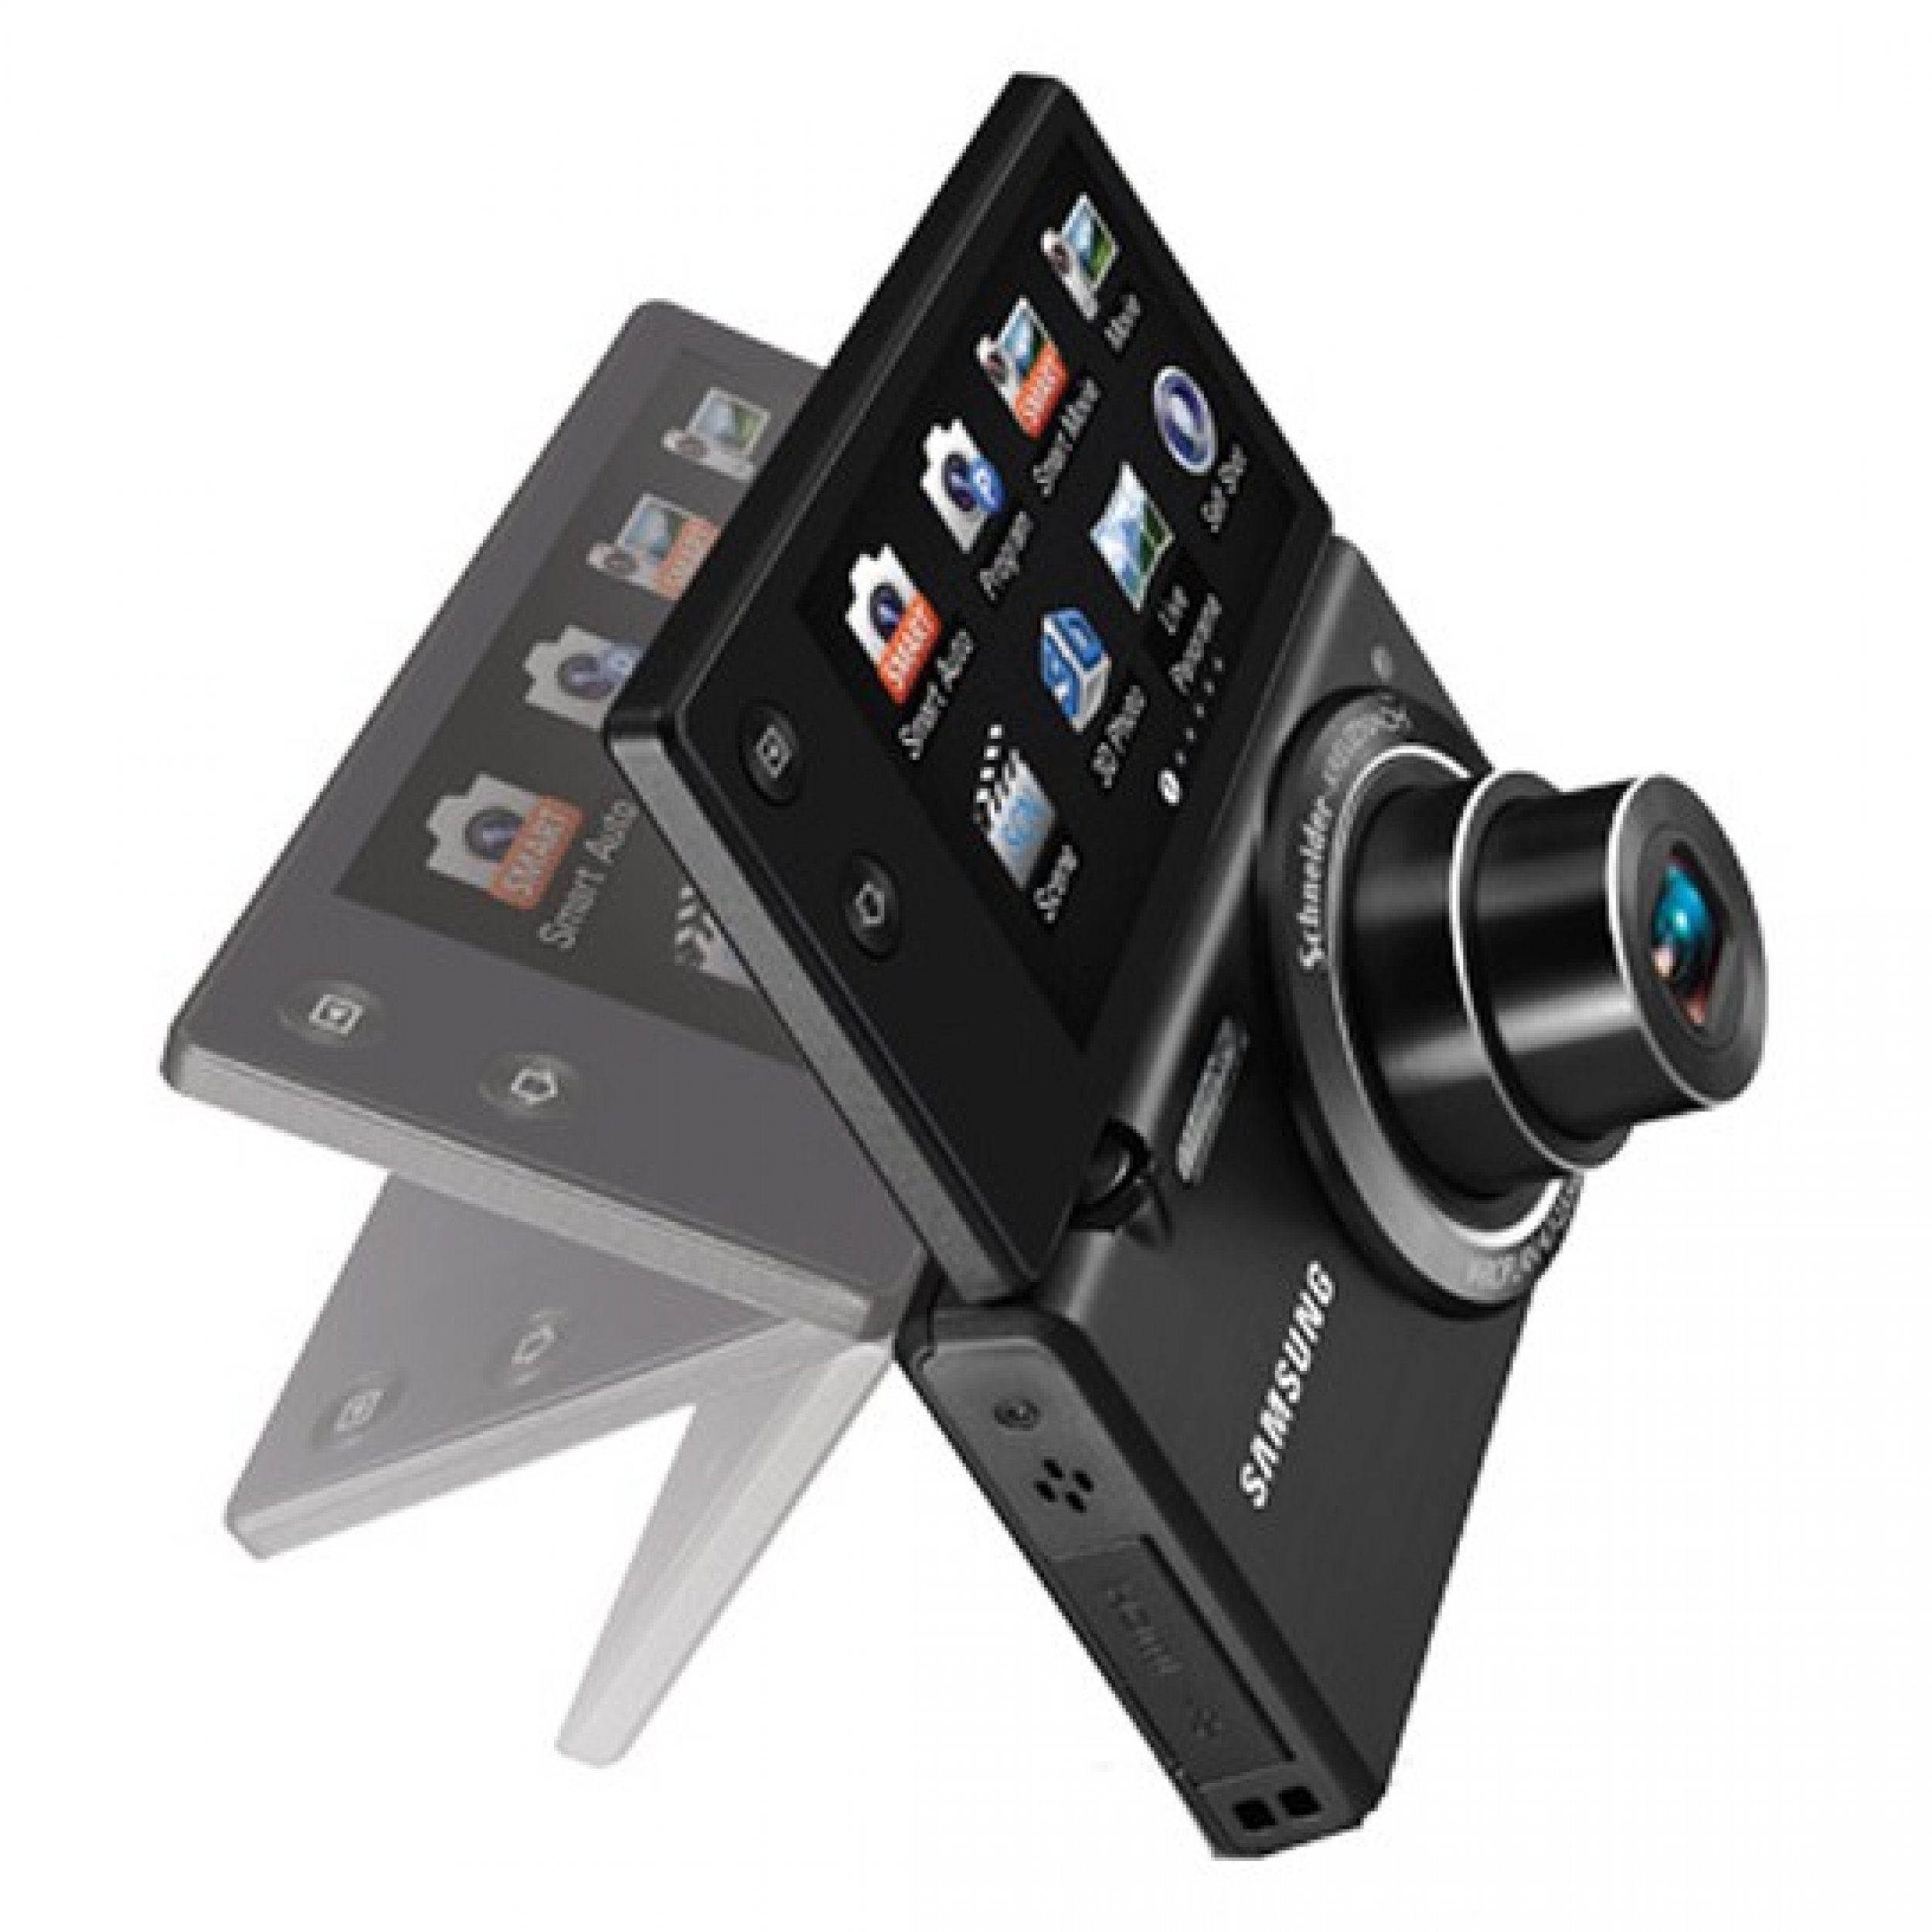 Samsung MultiView Compact Digital Camera